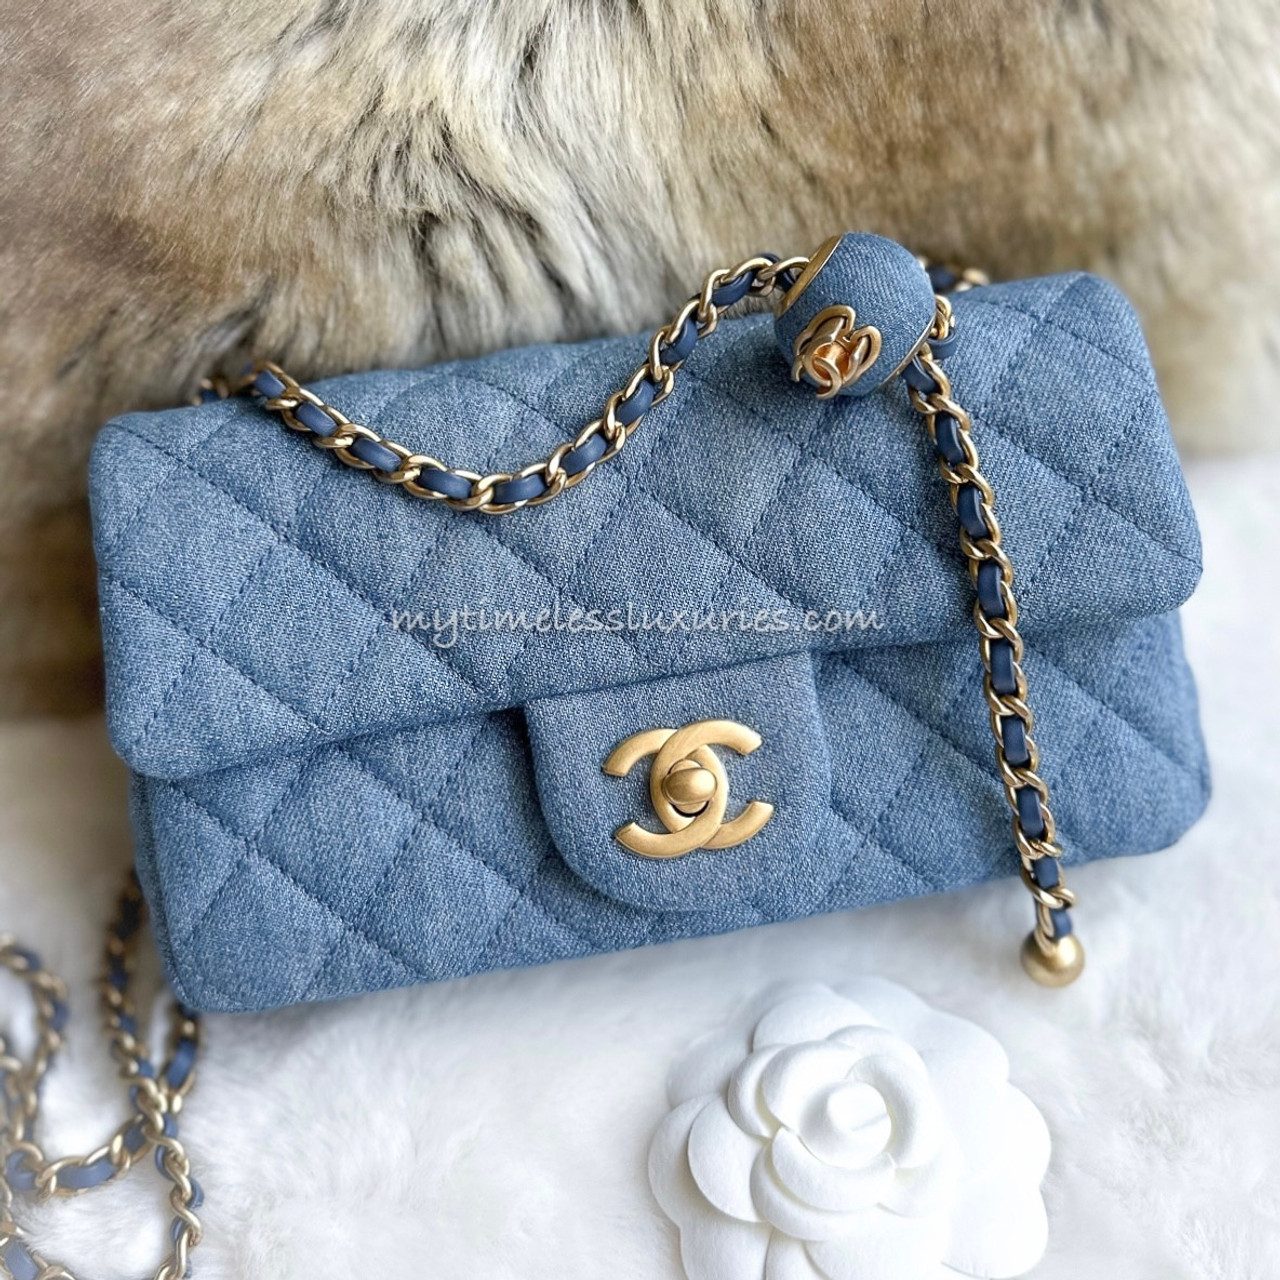 Chanel Pearl crush mini rectangular bag blue denim